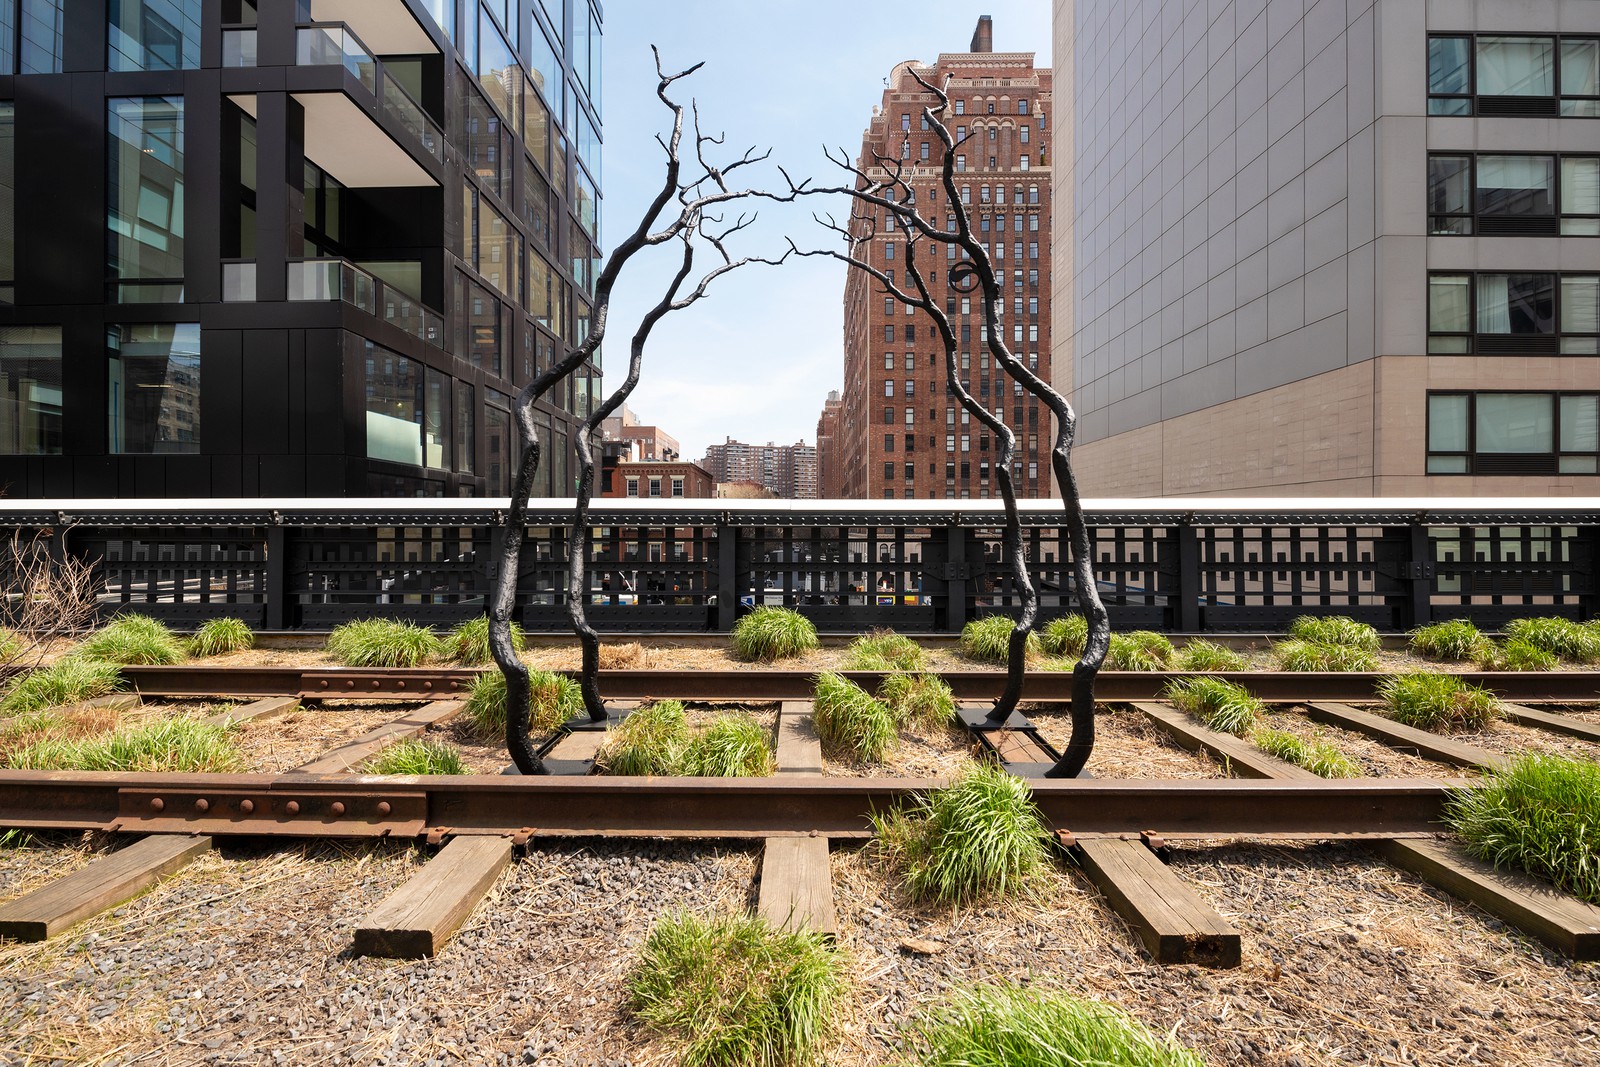 Forgiving Change, 2018, The High Line, New York